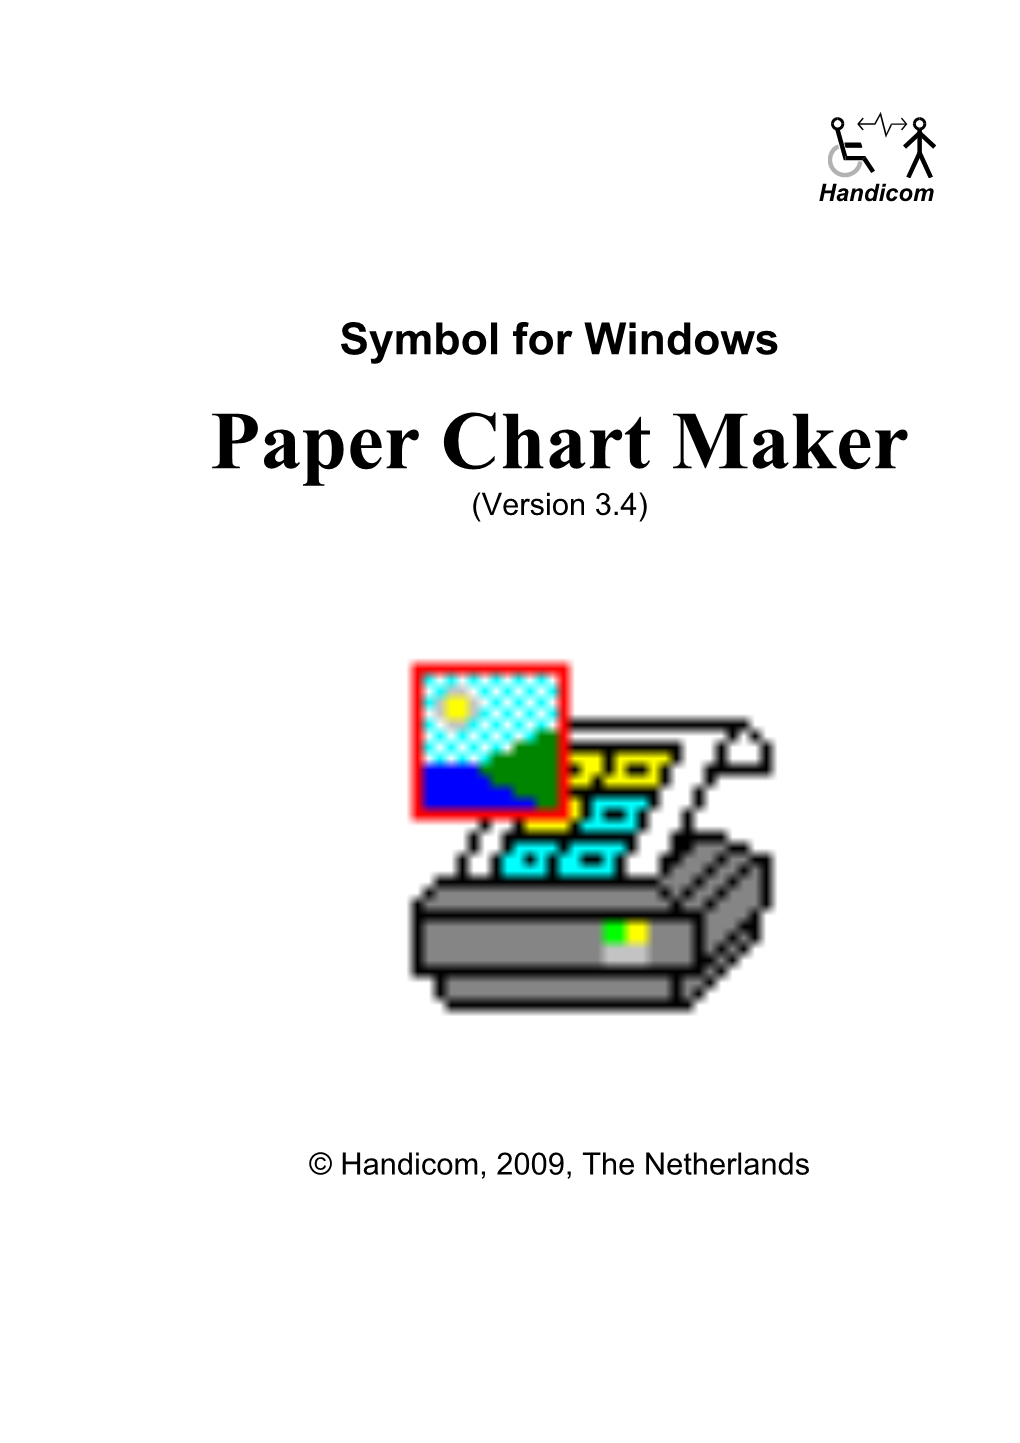 Symbol for Windows - Paper Chart Maker